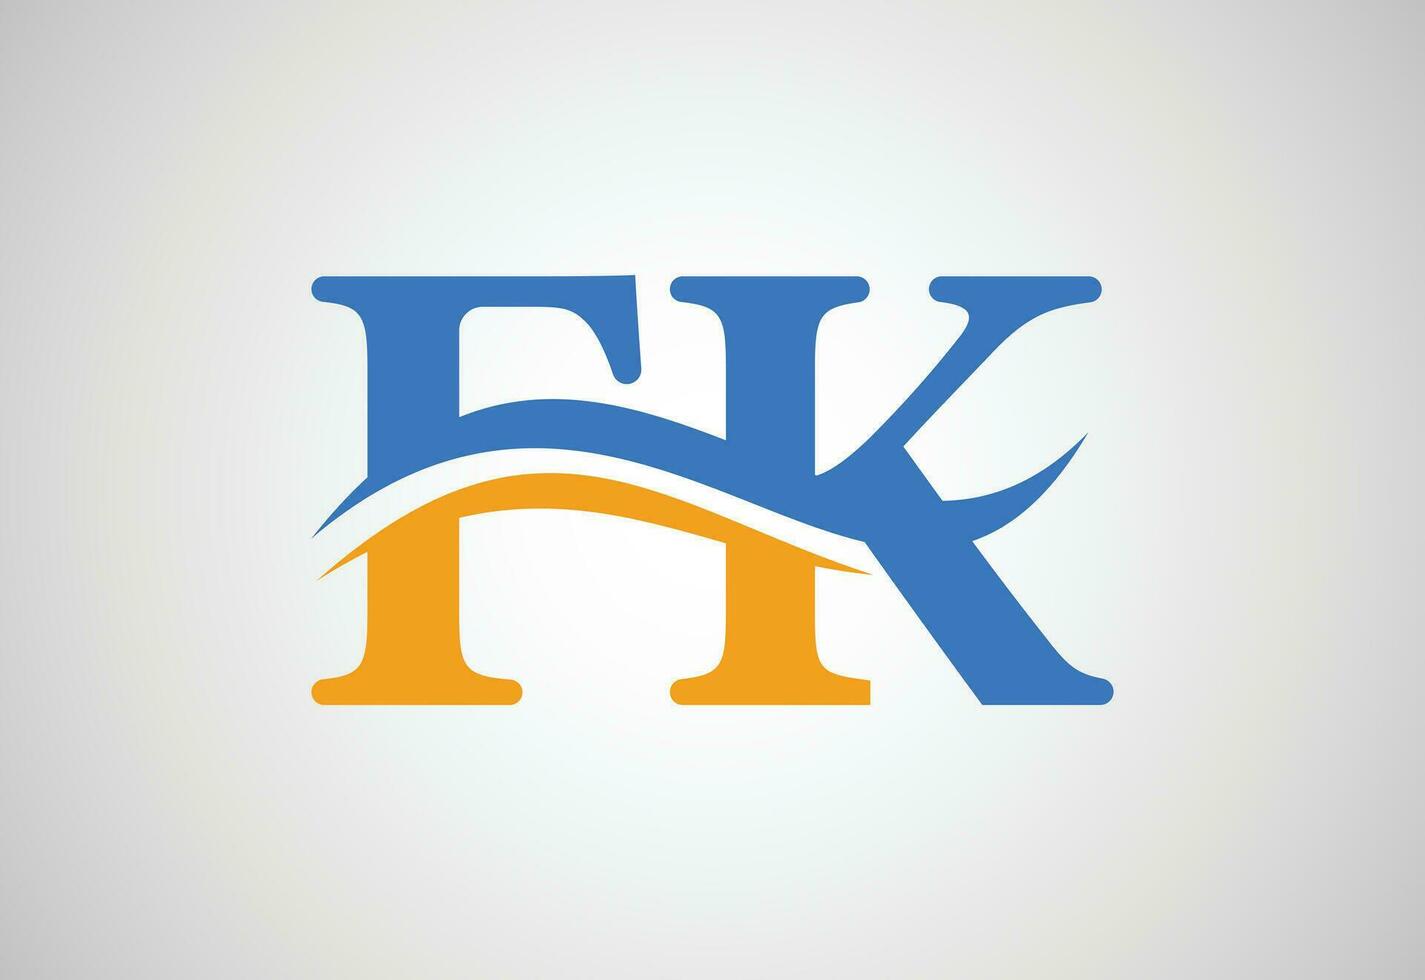 Alphabets FK letter logo design with creative sign, Vector illustration